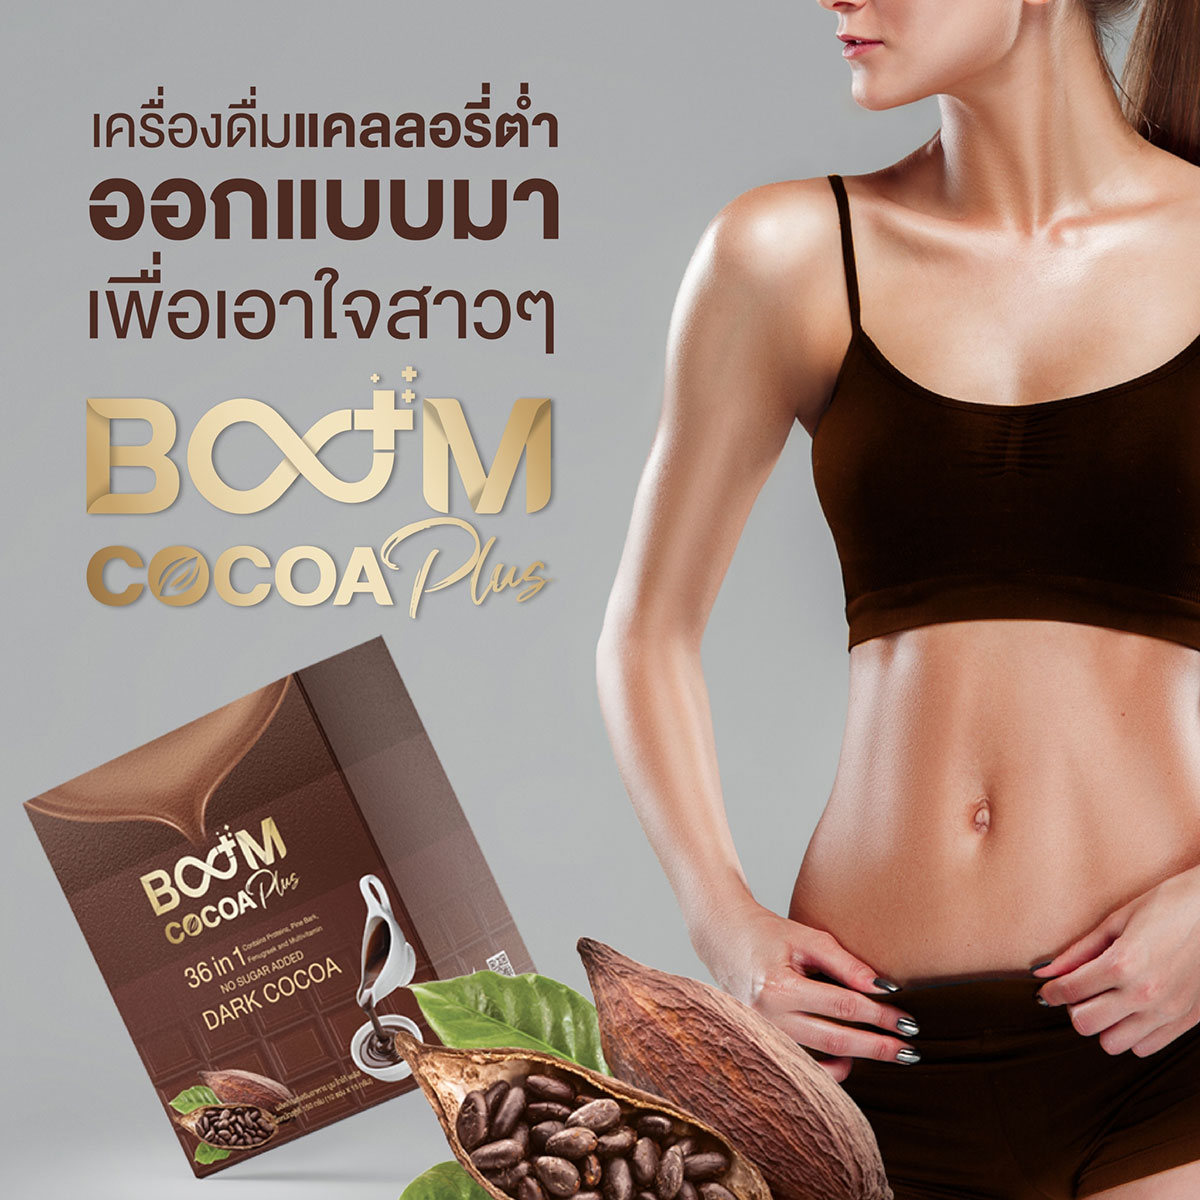 Boom Cocoa Plus เครื่องดื่มแคลอรี่ต่ำ